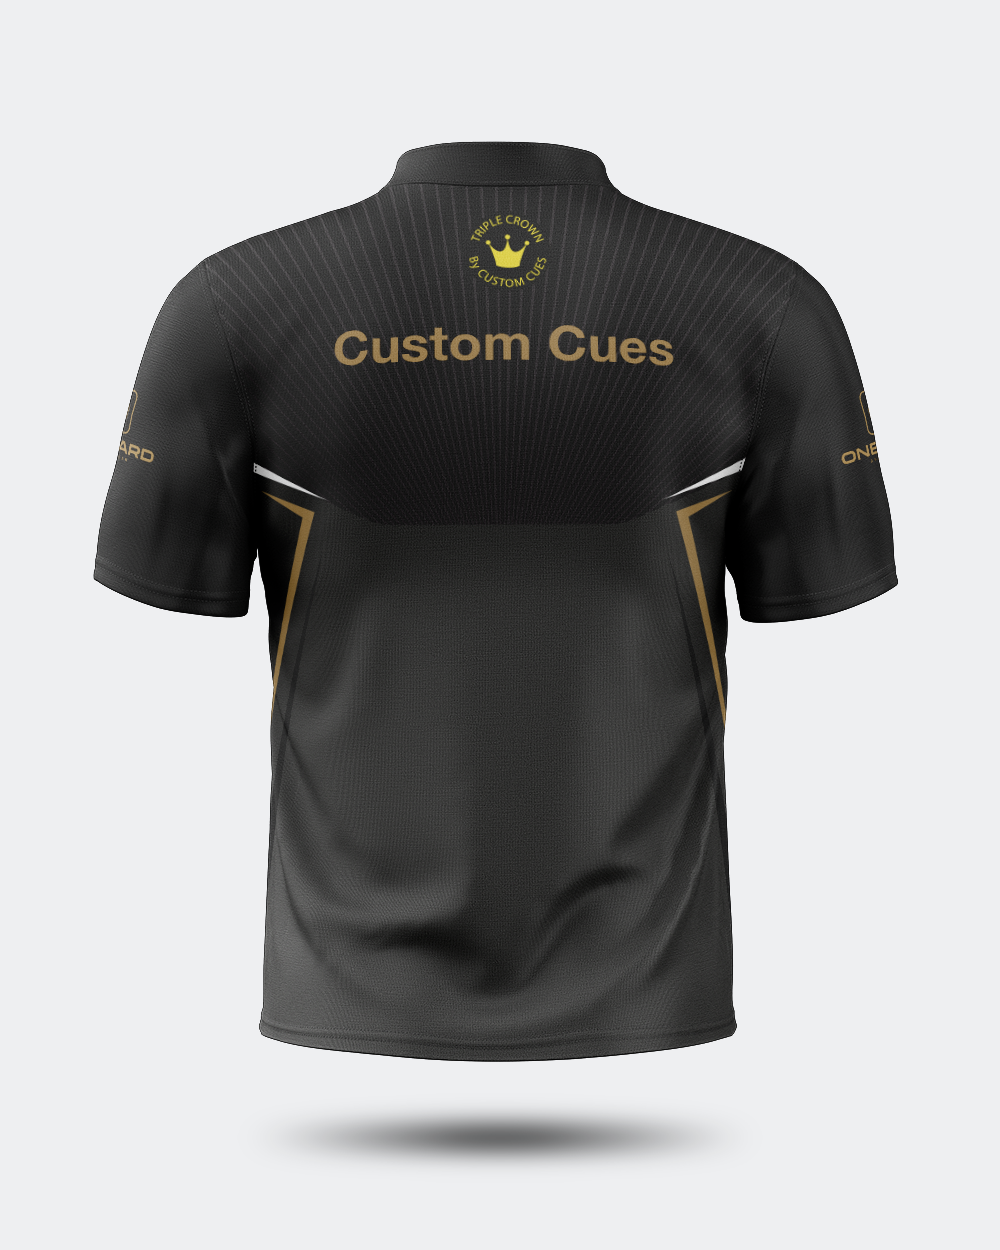 Custom Cues Jersey - Black